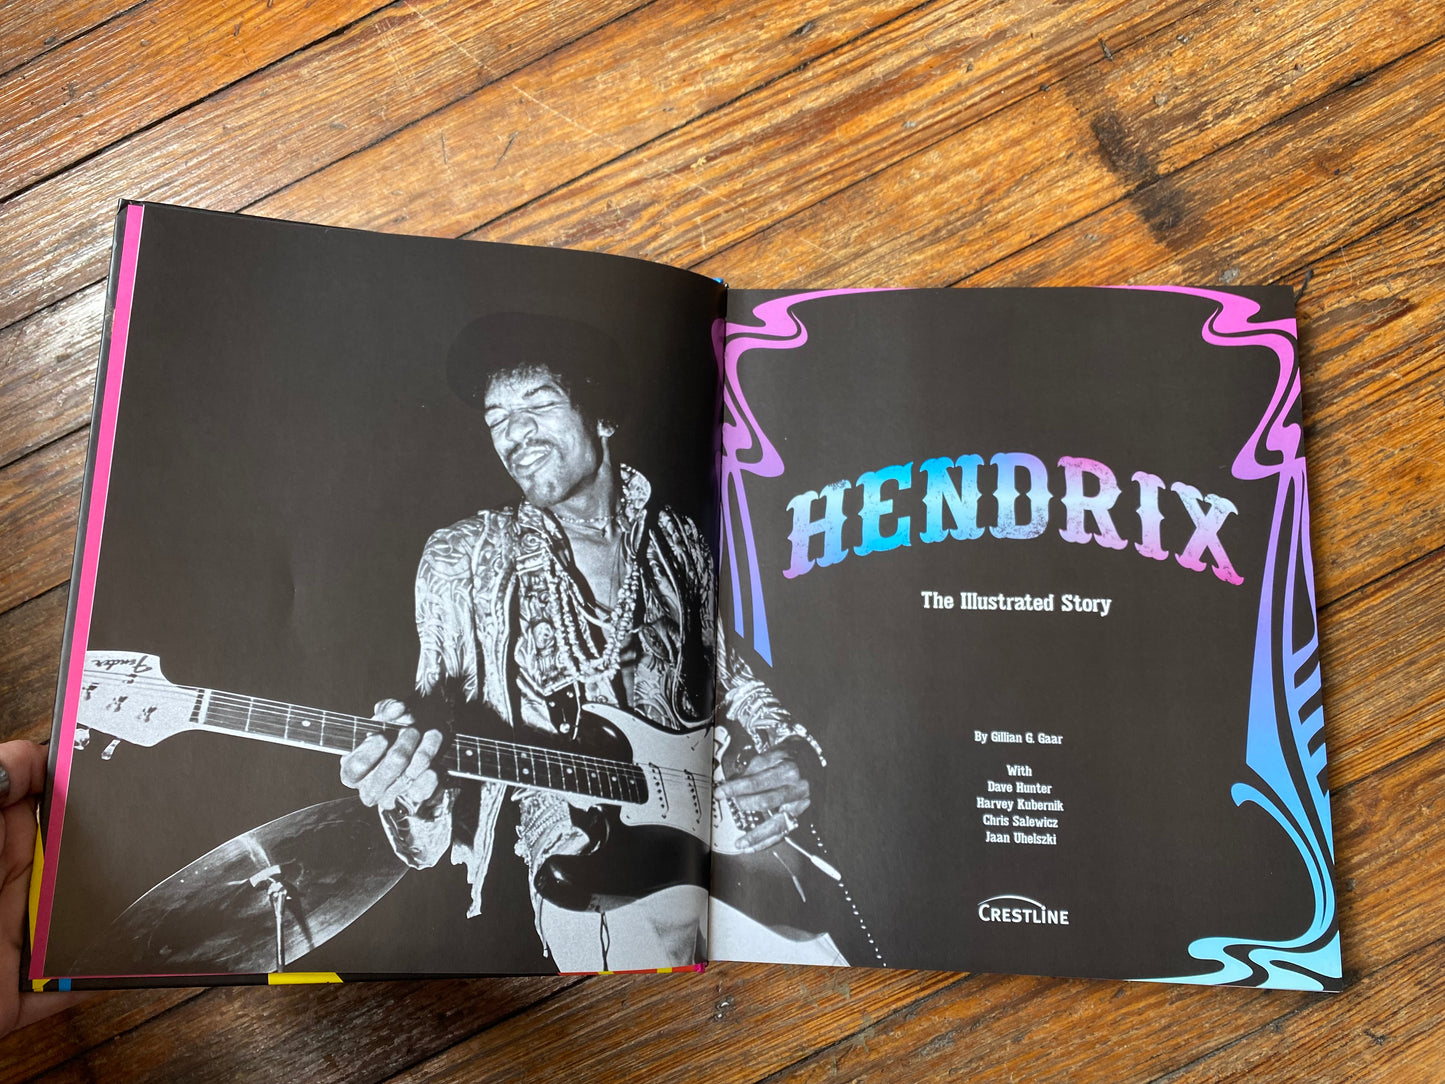 Hendrix: The Illustrated Story by Gillian G. Gaar